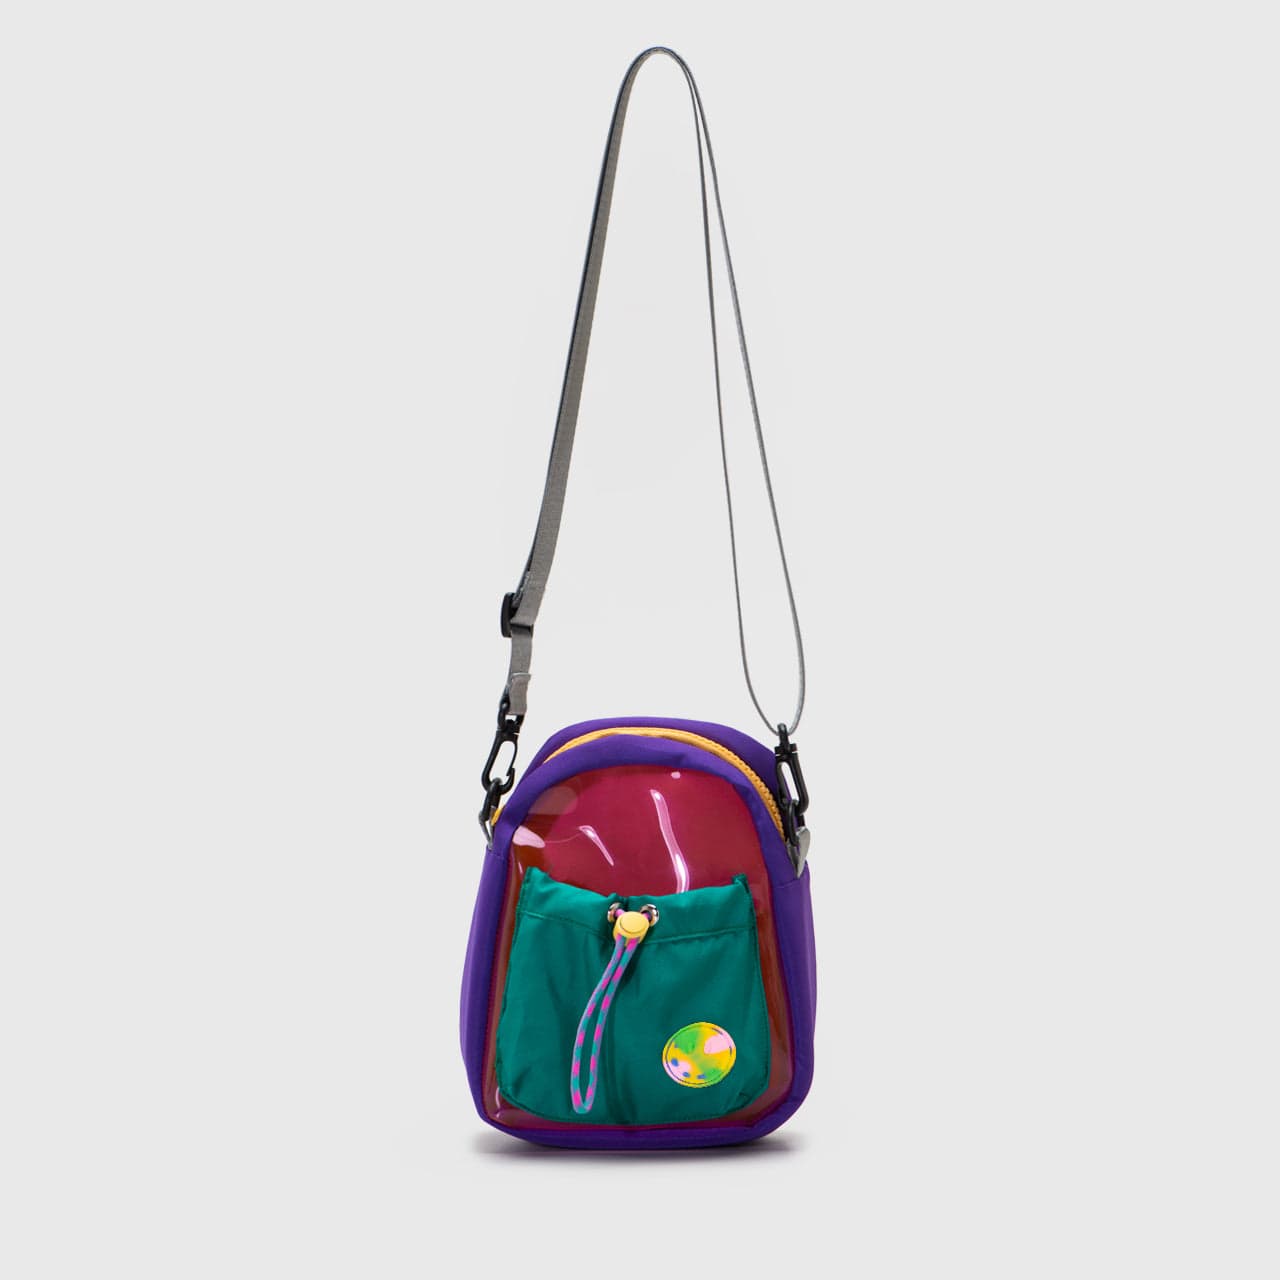 Adorable Projects Sling Bag Colorblock Liana Bag Colorblock